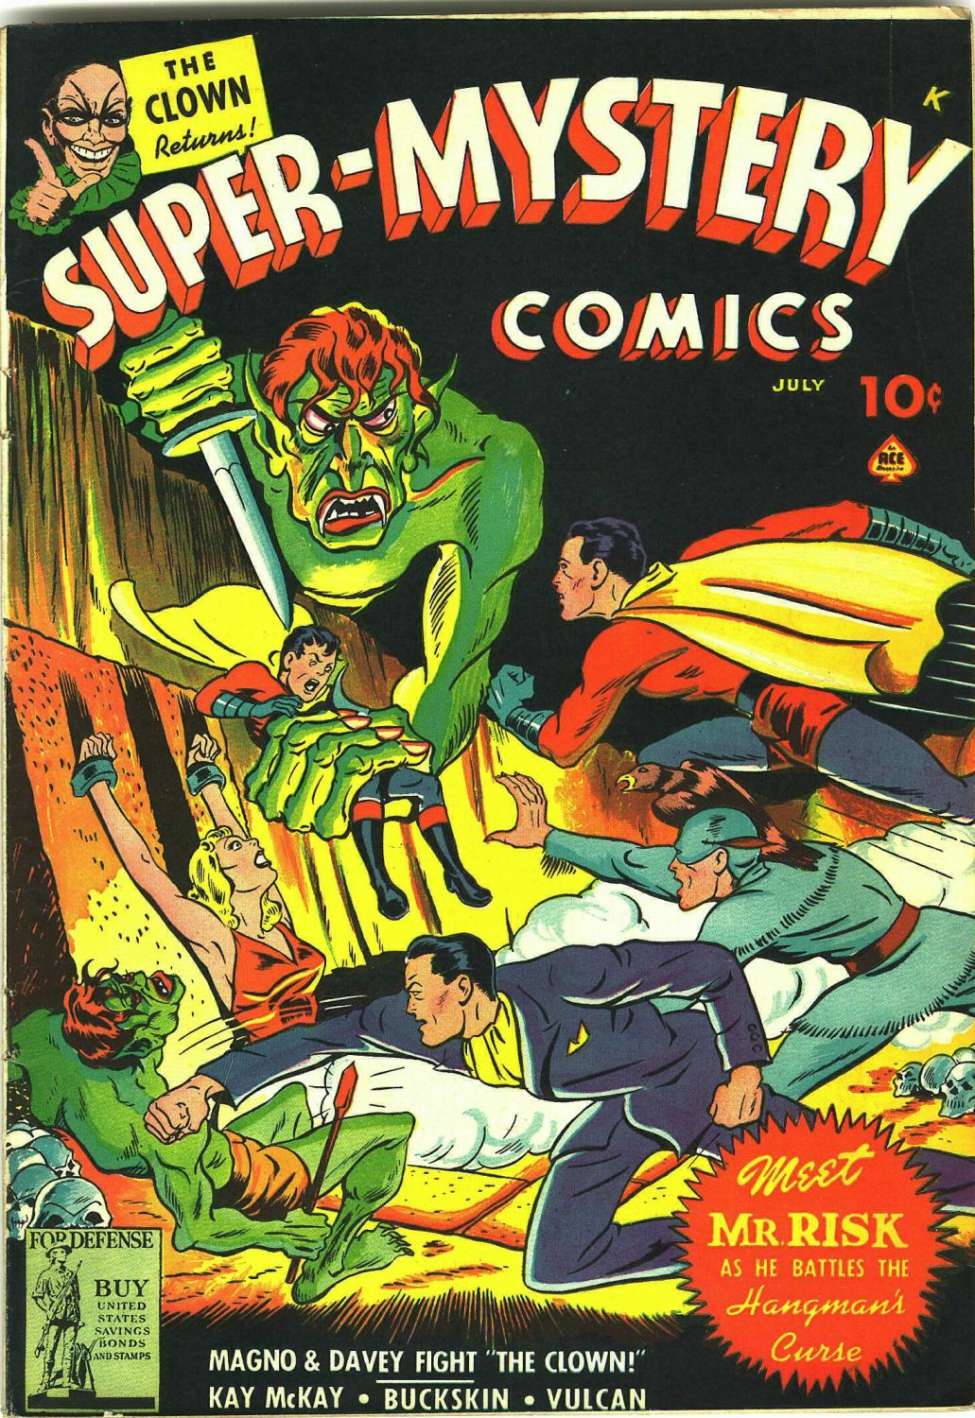 Book Cover For Super-Mystery Comics v3 2 - Version 1